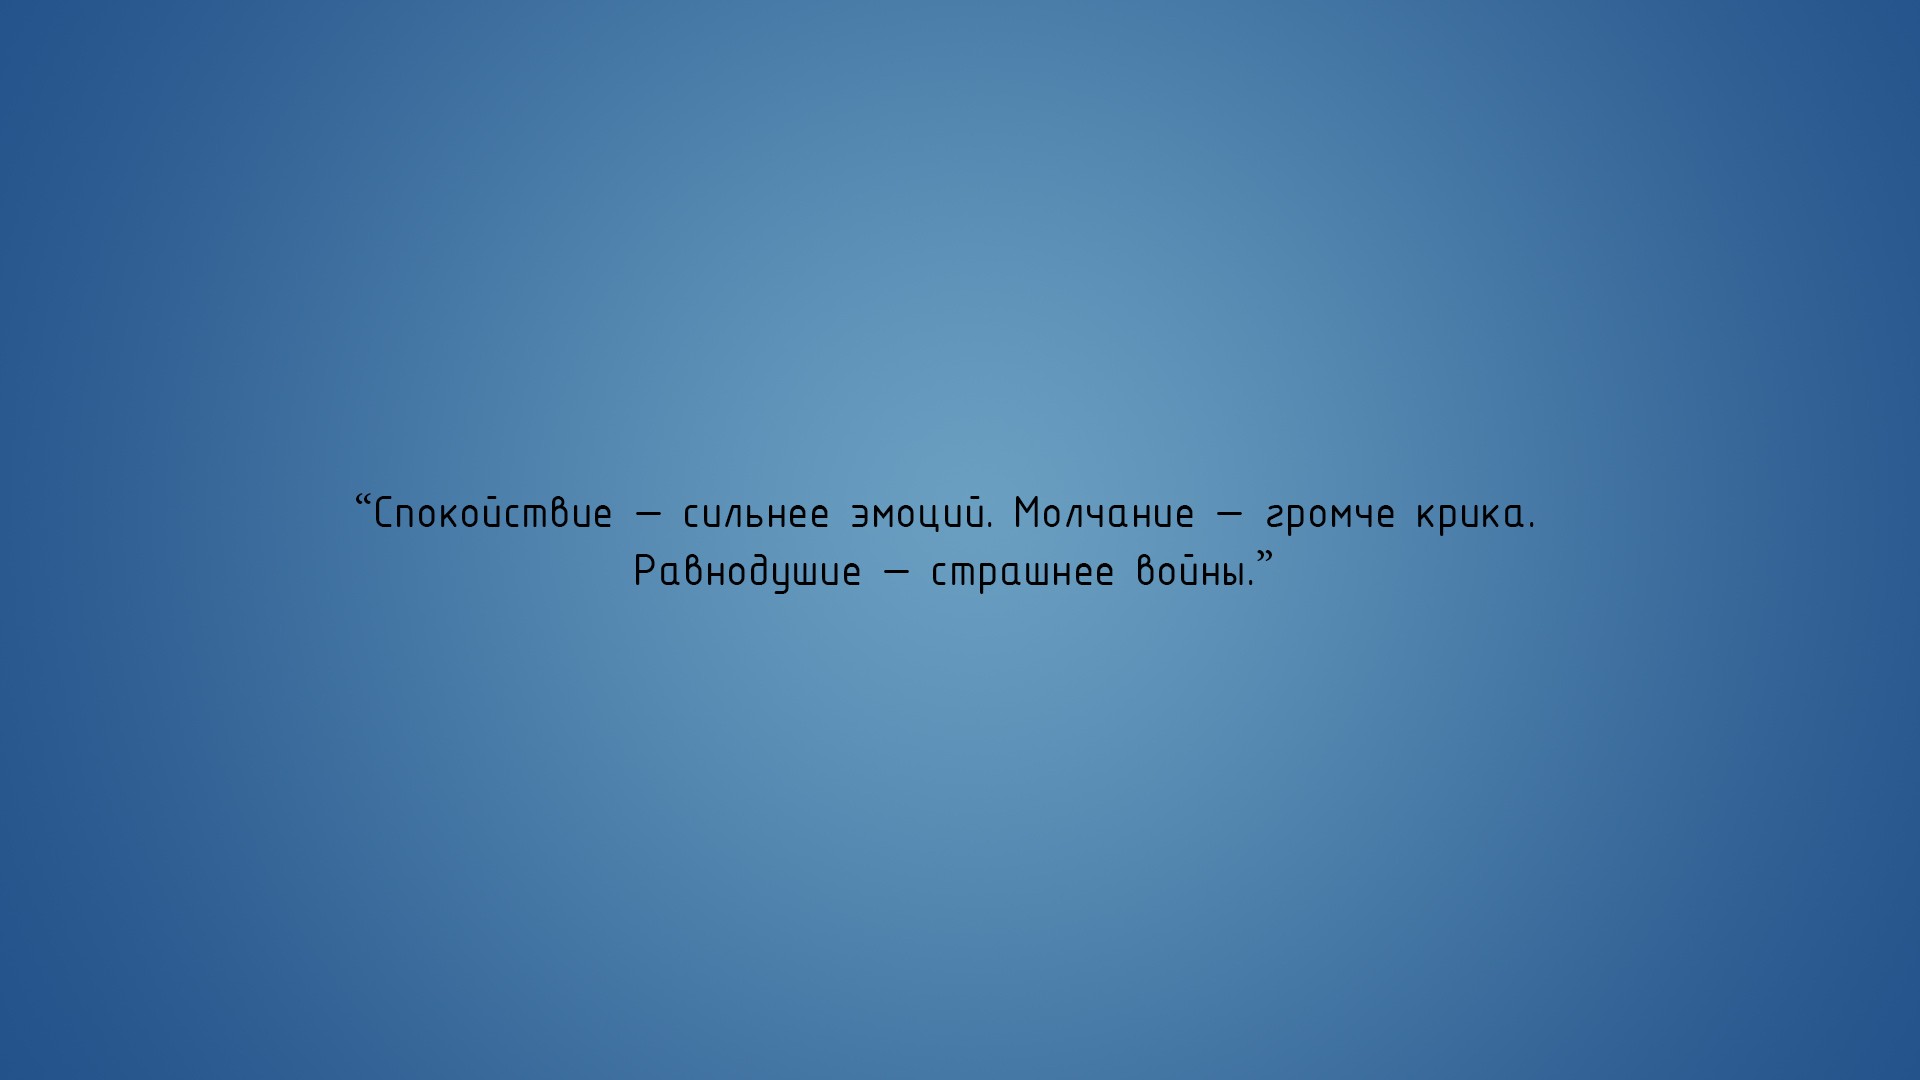 Writing Text Russian 1920x1080